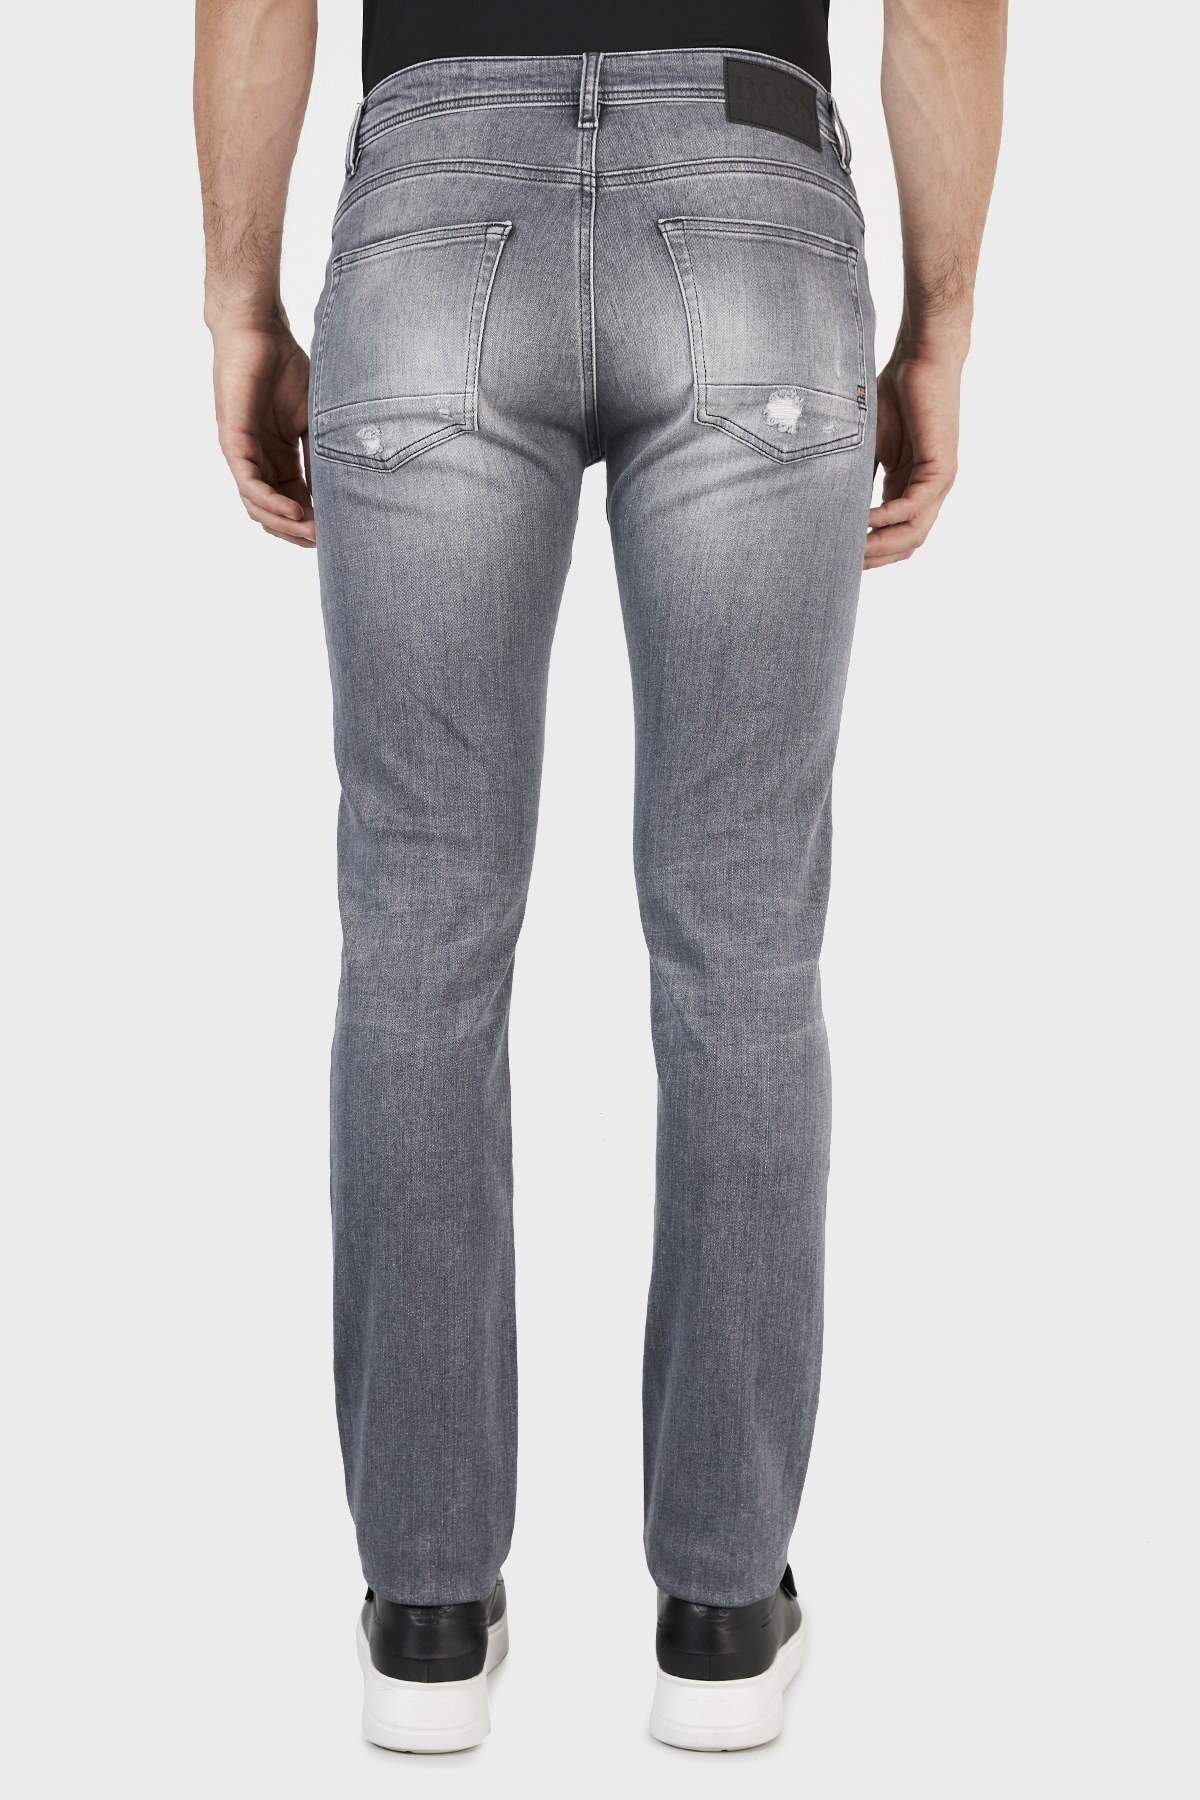 Hugo Boss Slim Fit Cepli Pamuklu Jeans Erkek Kot Pantolon 50453292 033 GRİ